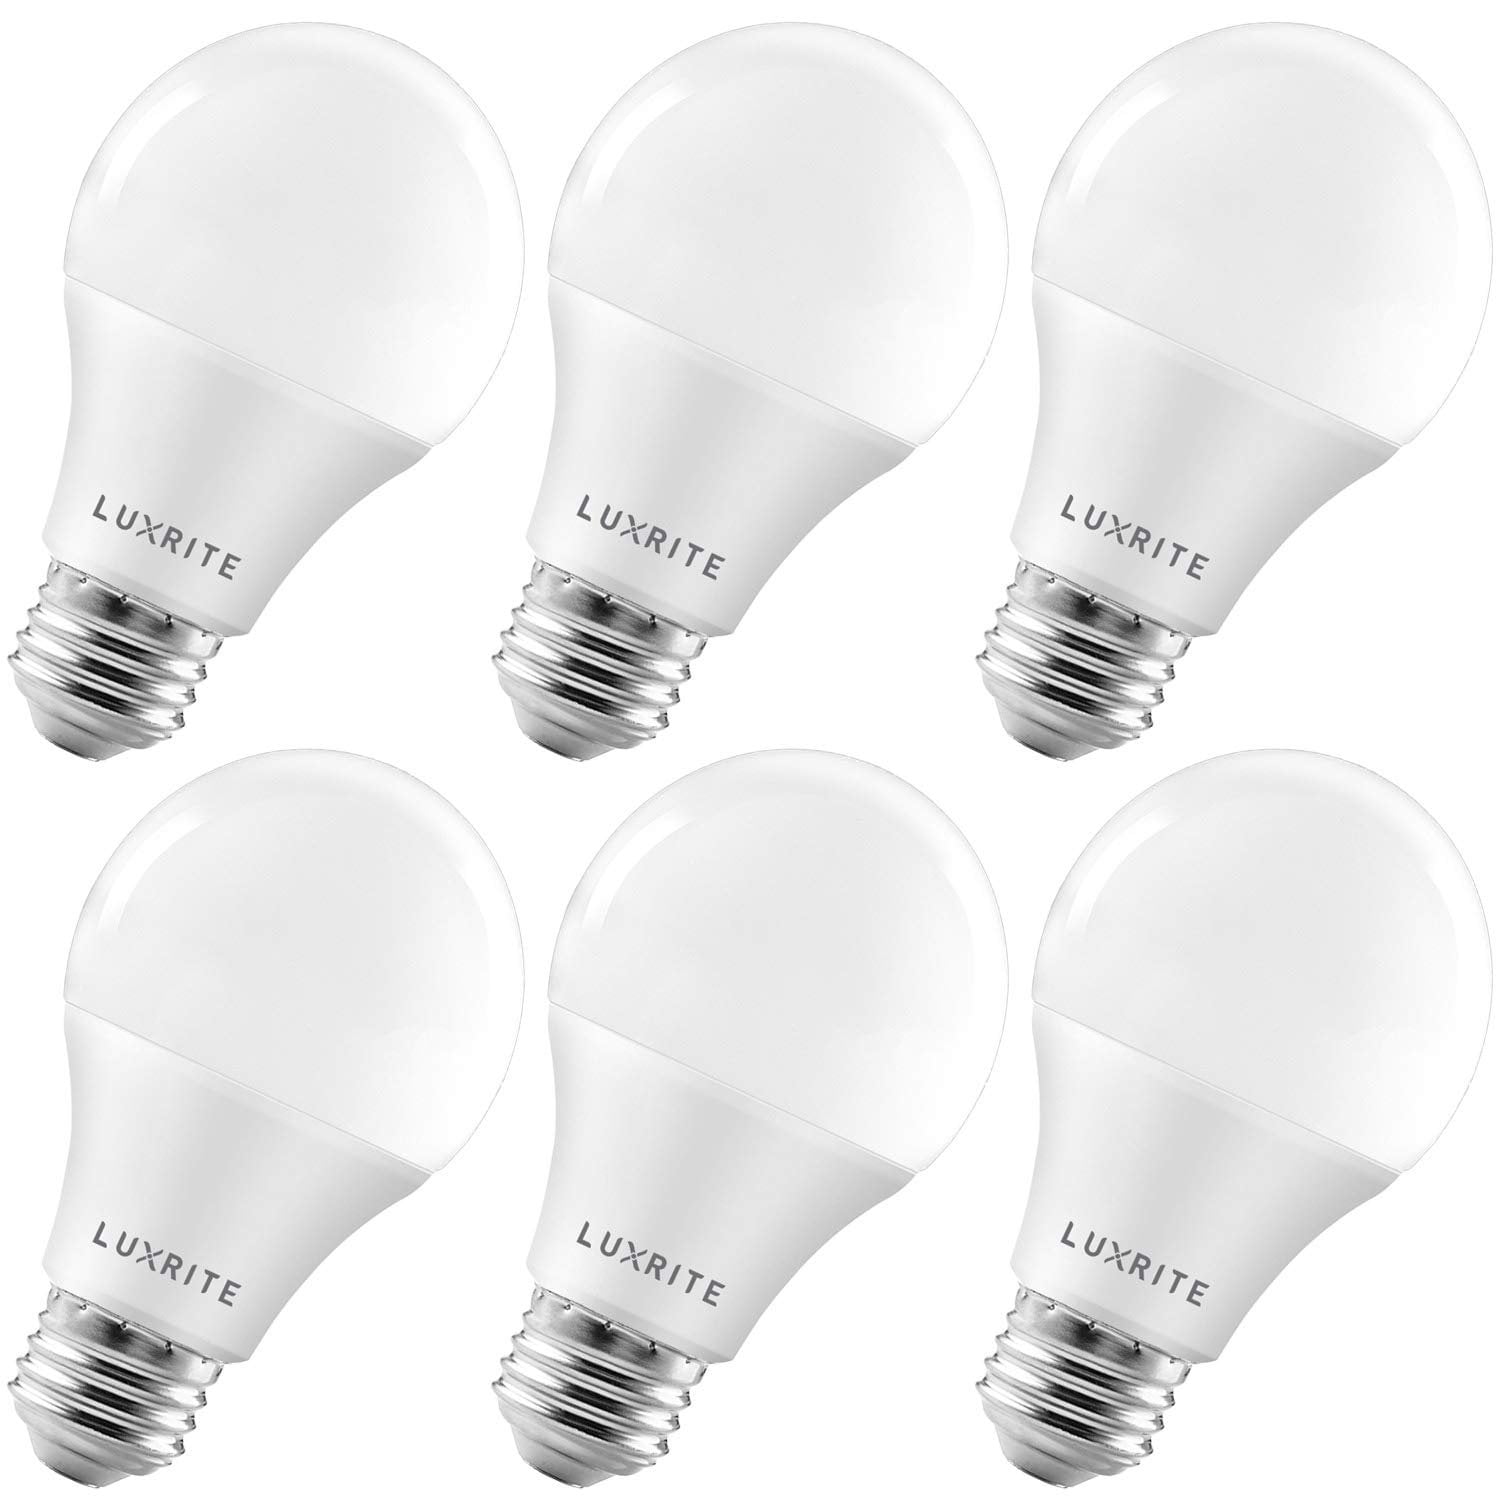 Floreren schrijven Verlammen Luxrite A19 LED Dimmable Light Bulb 11W 75W Equivalent 3000K Warm White, 1100  Lumens E26, 6-Pack - Walmart.com